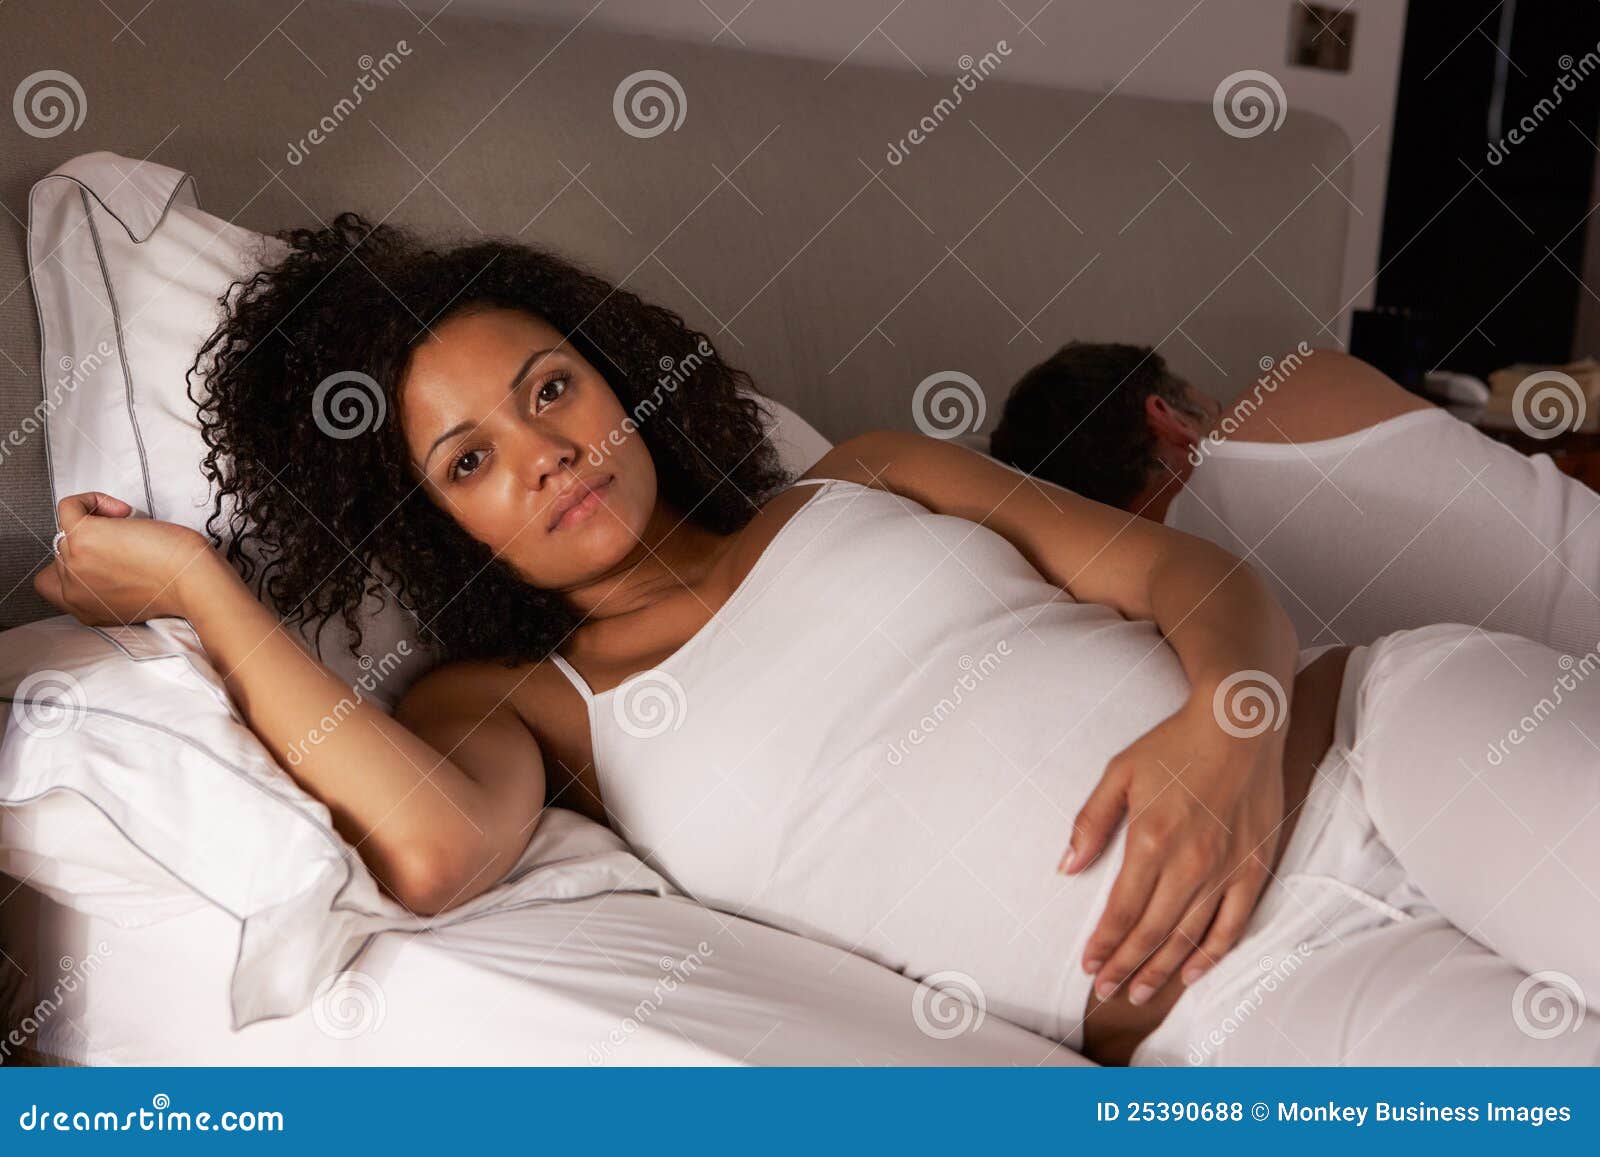 pregnant woman unable to sleep